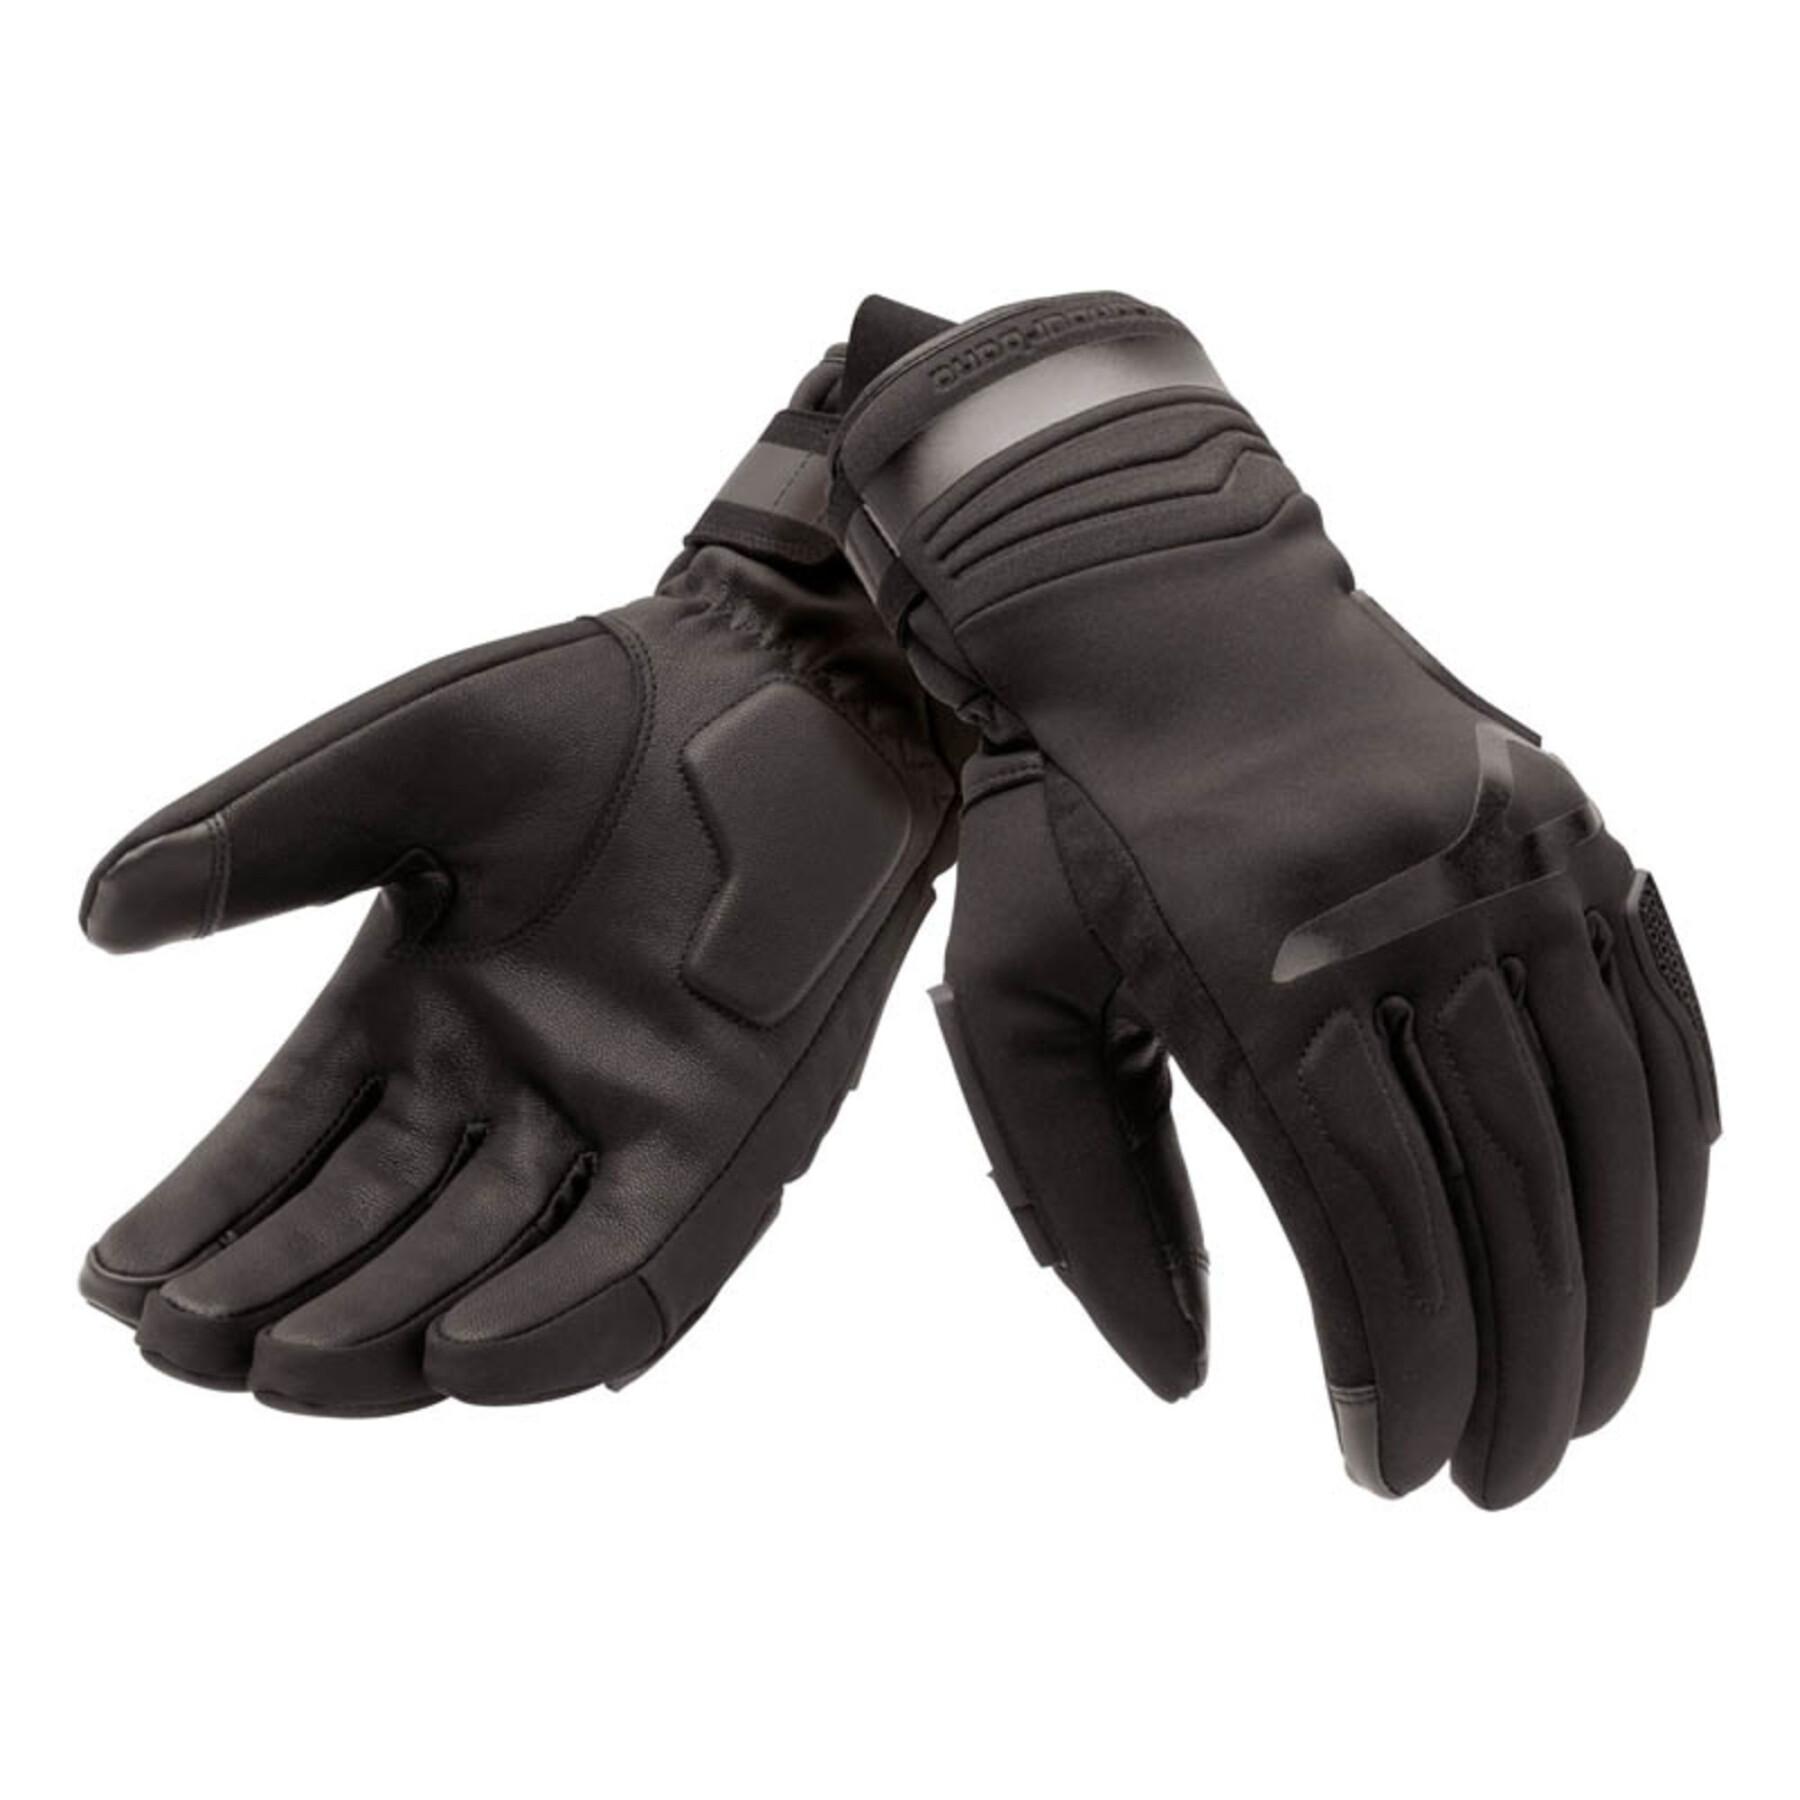 Winter motorcycle gloves Tucano Urbano Target